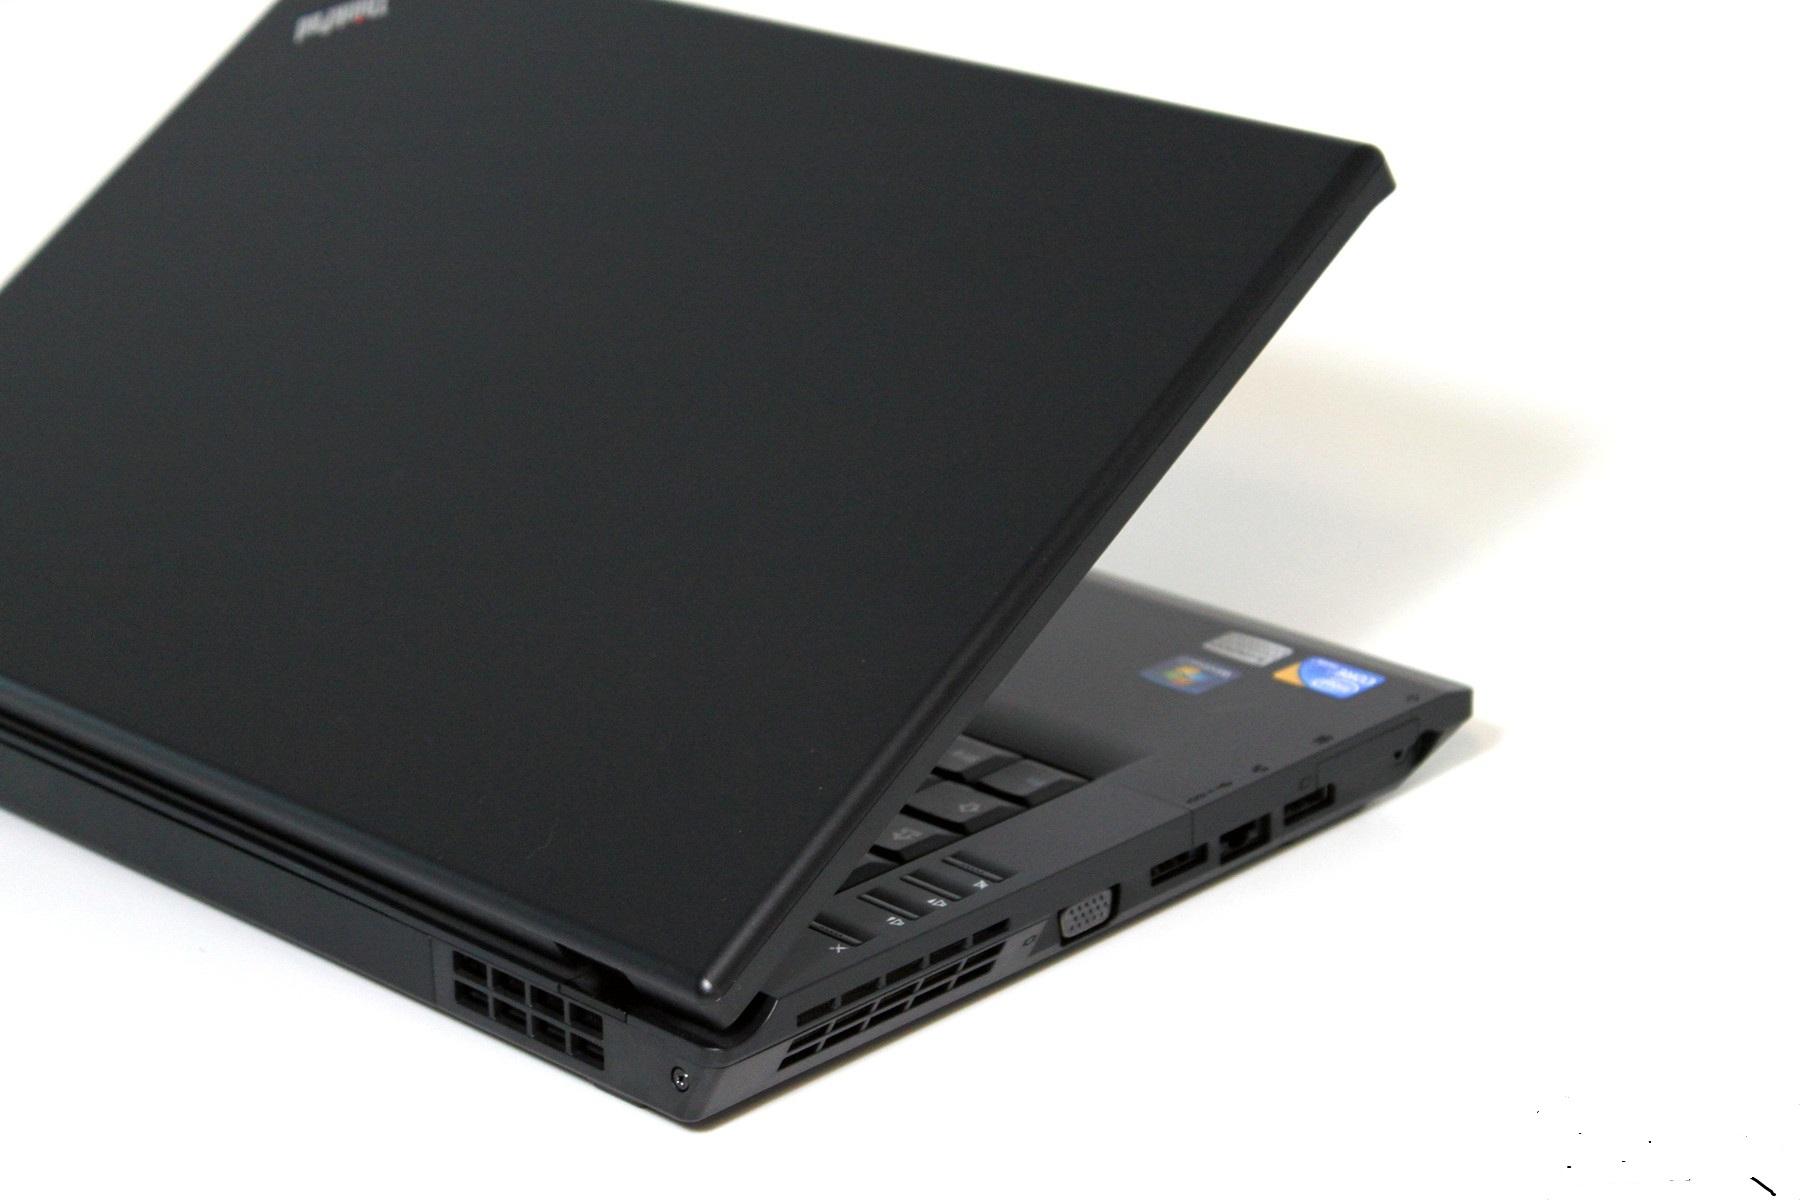 Laptop IBM Thinkpad L412 - Core I3